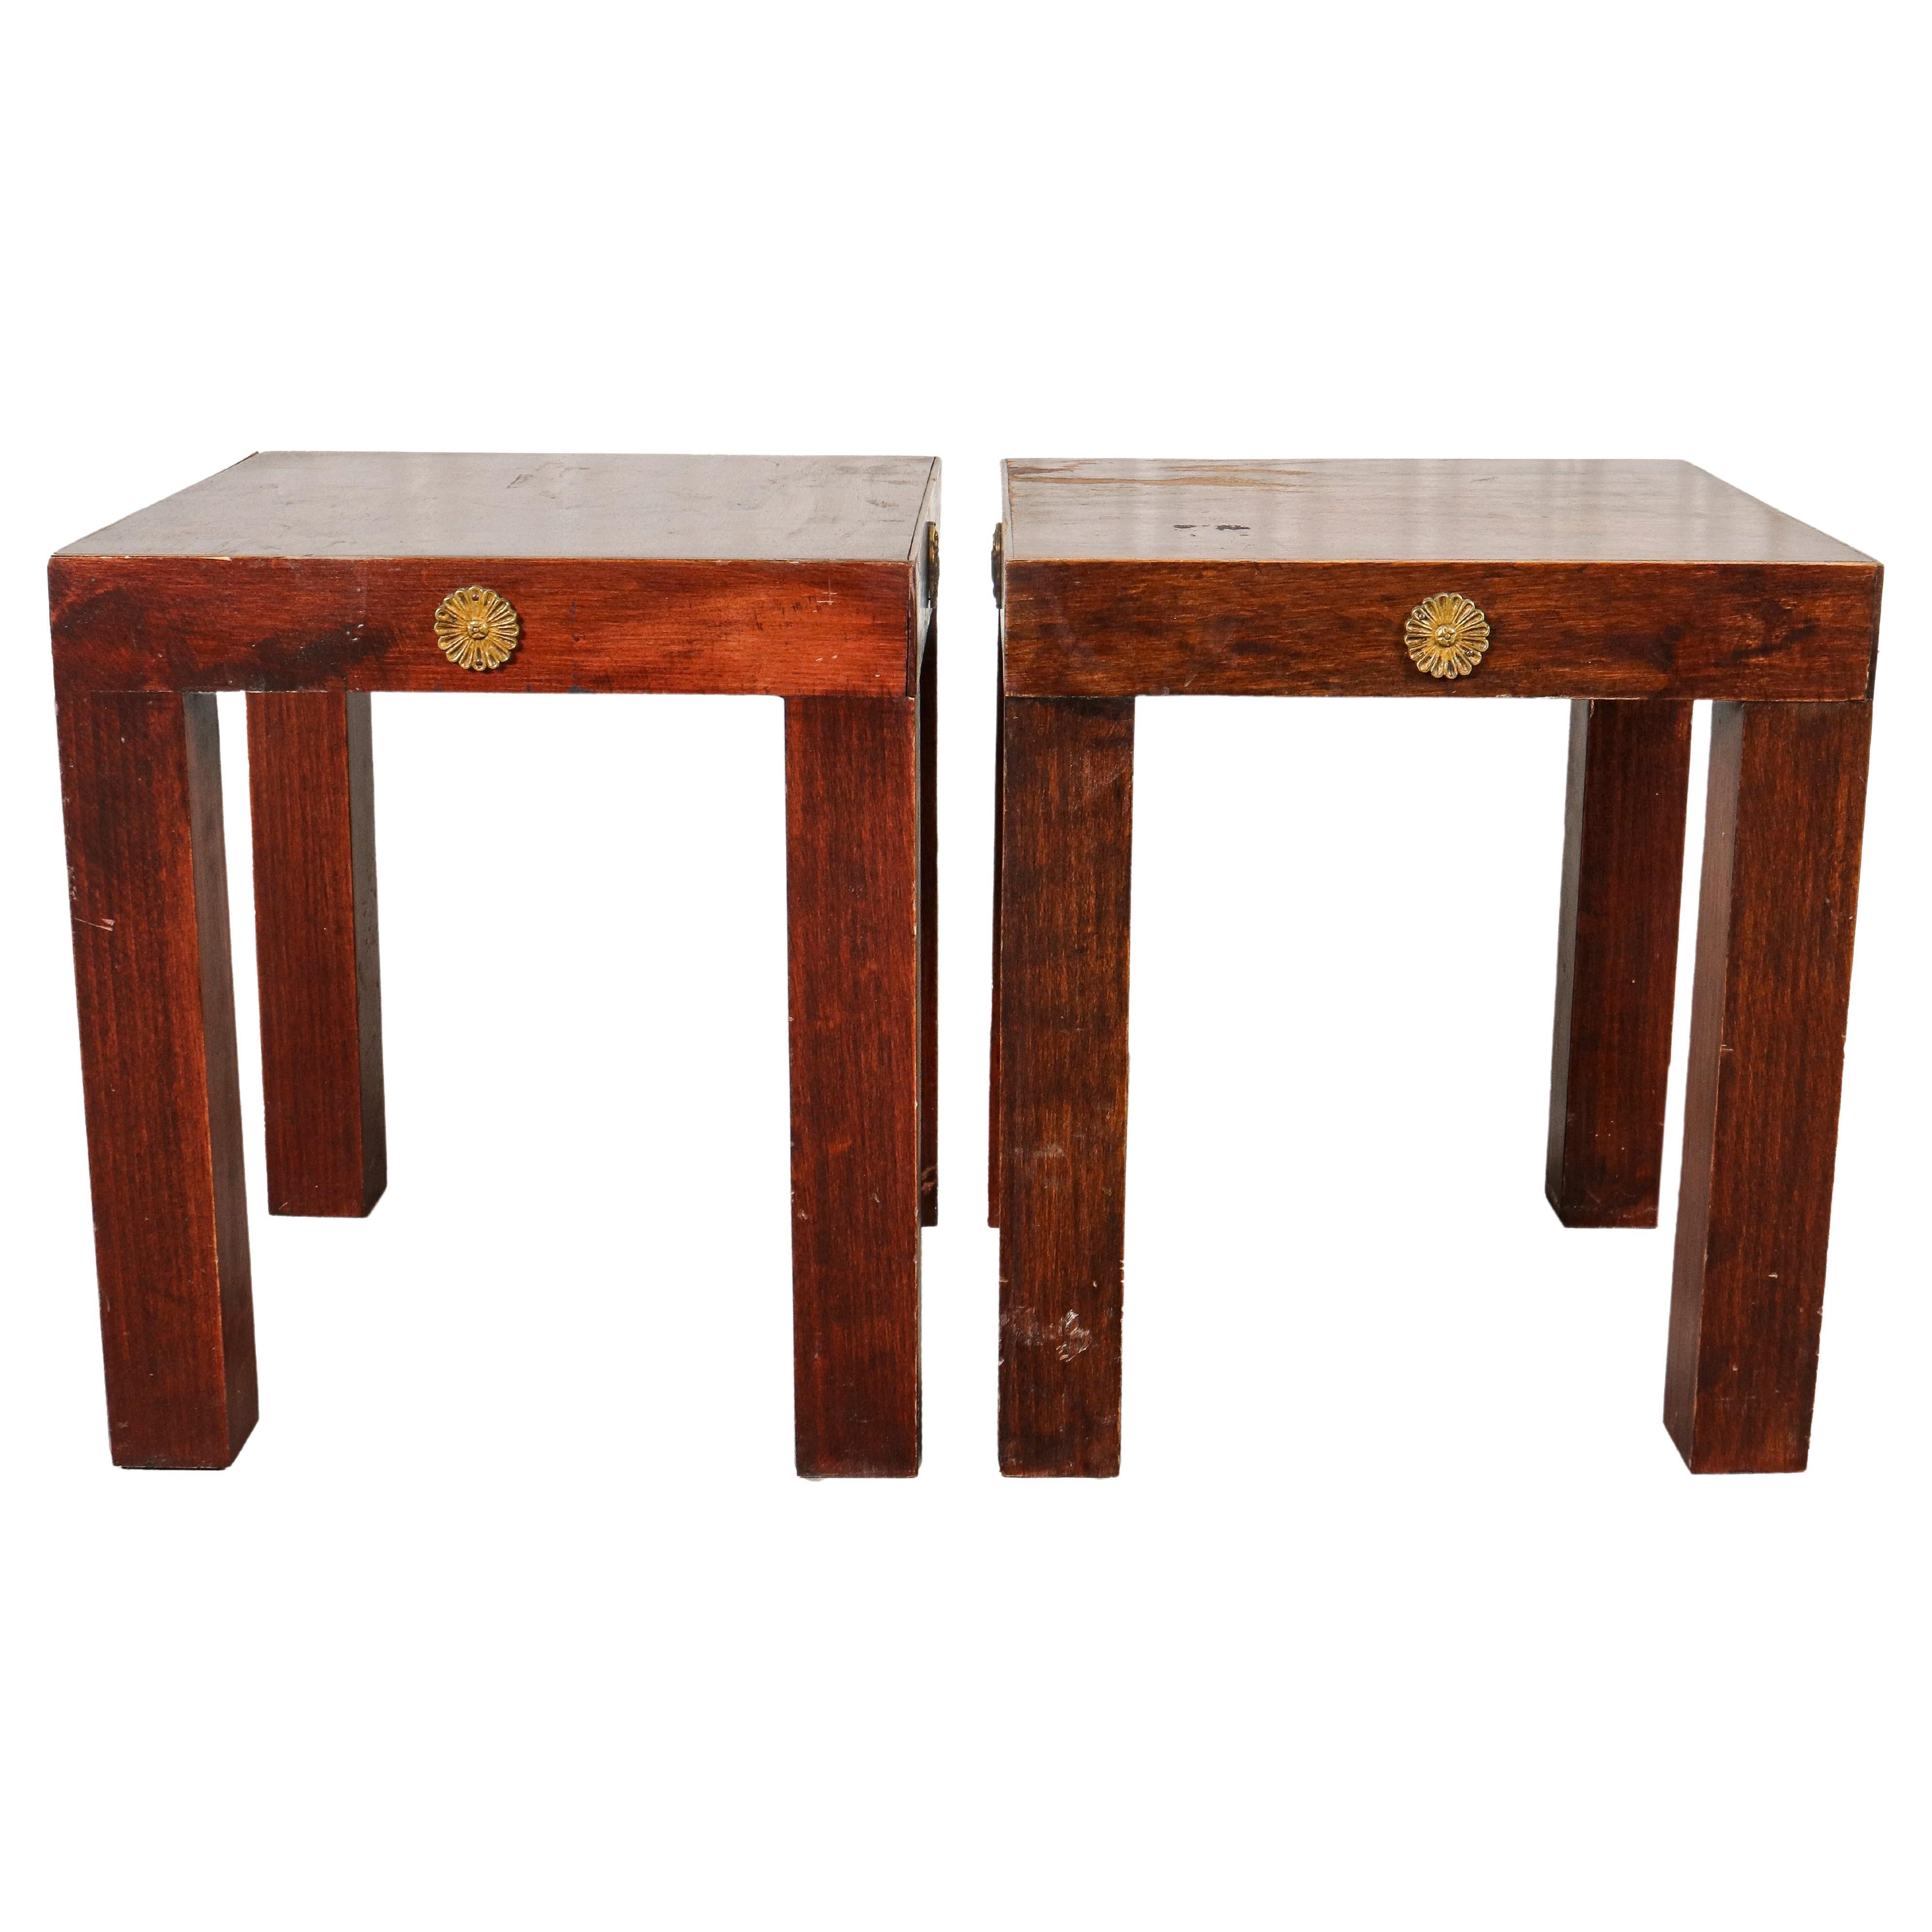 Empire Revival Diminutive Pedestal Tables, Pair